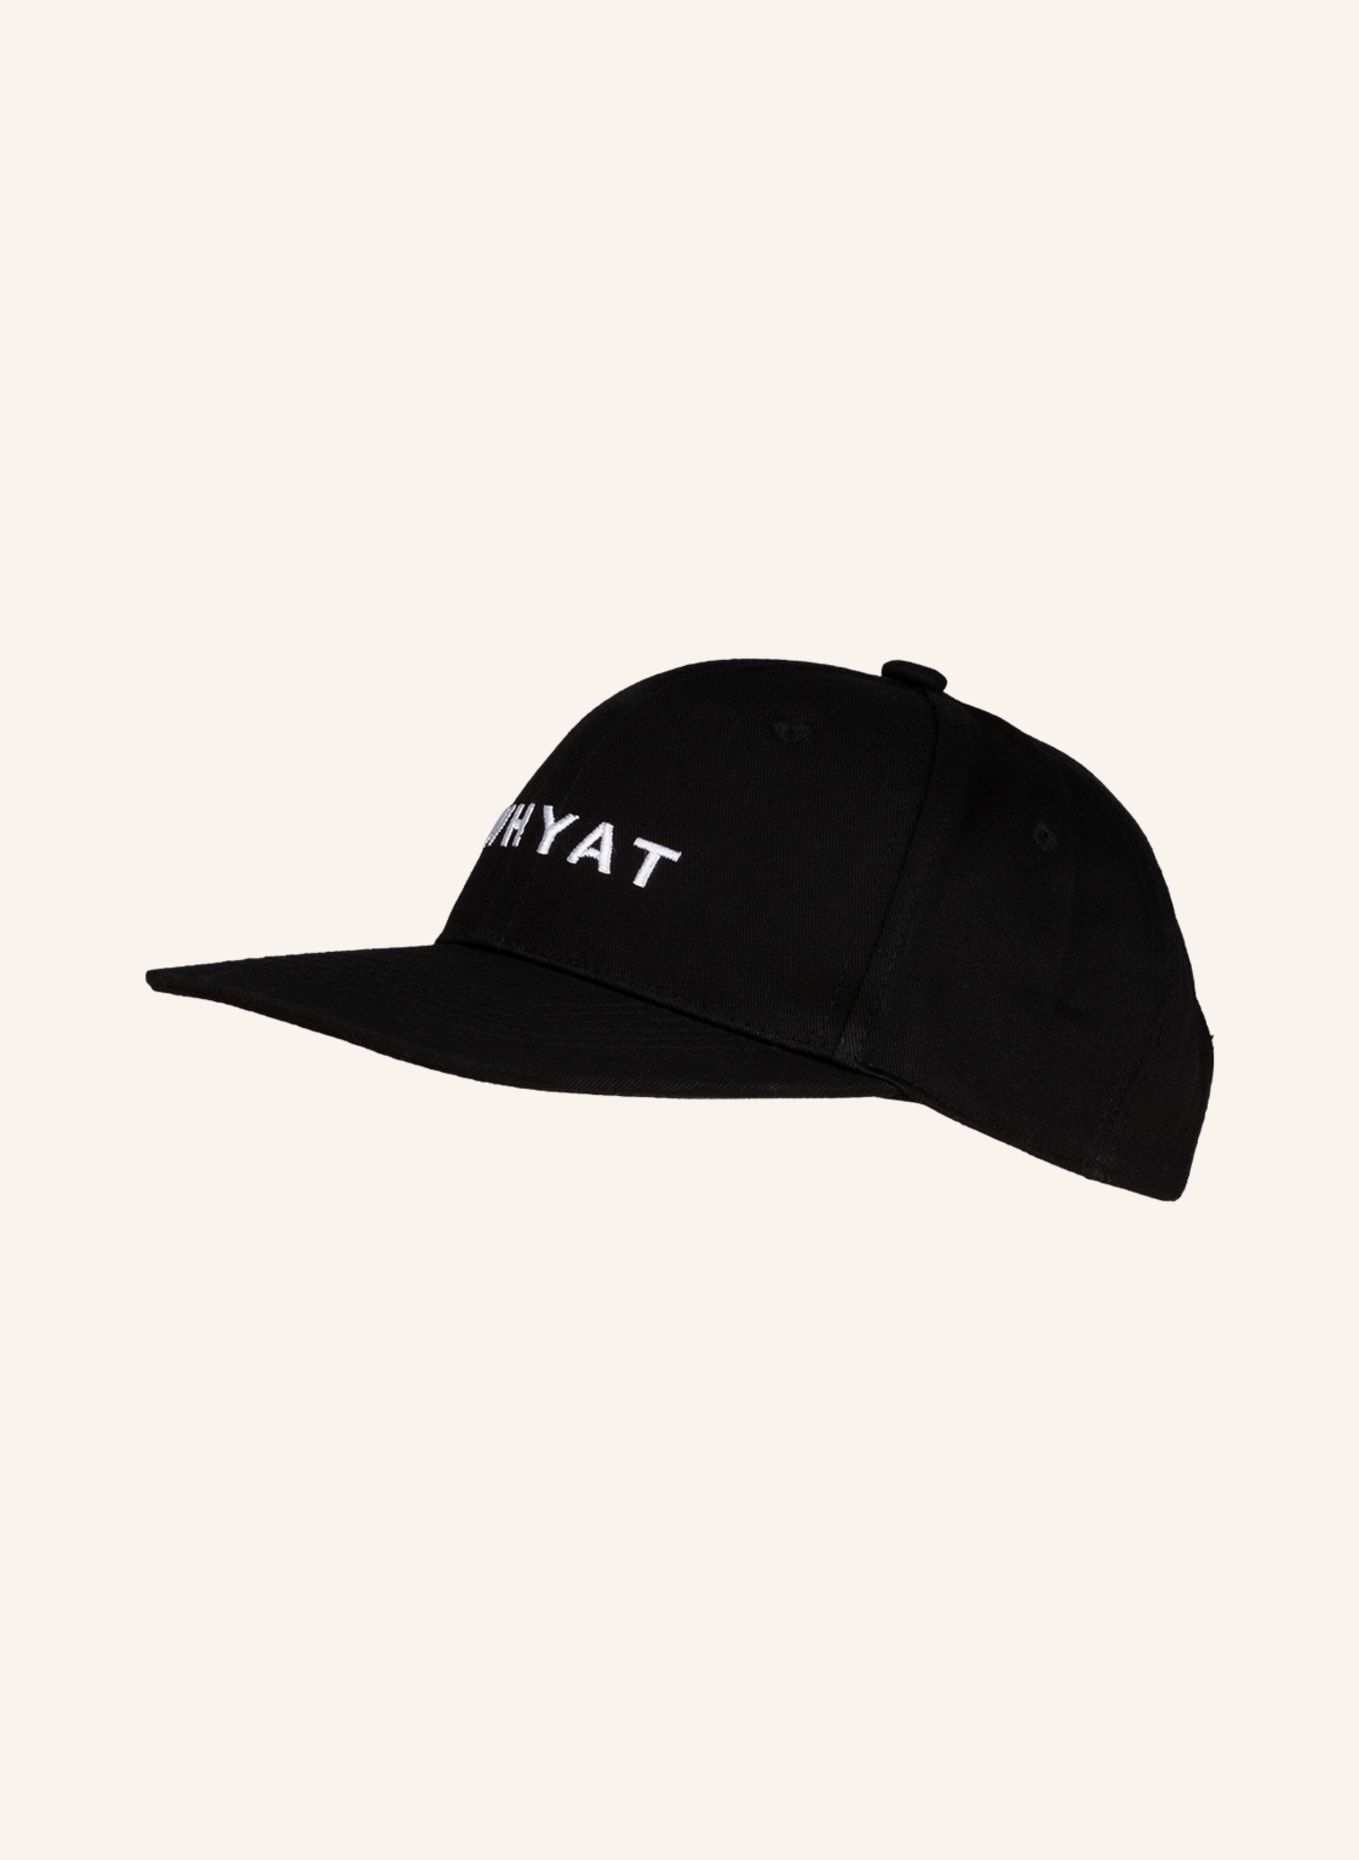 WHYAT Cap, Color: BLACK (Image 1)